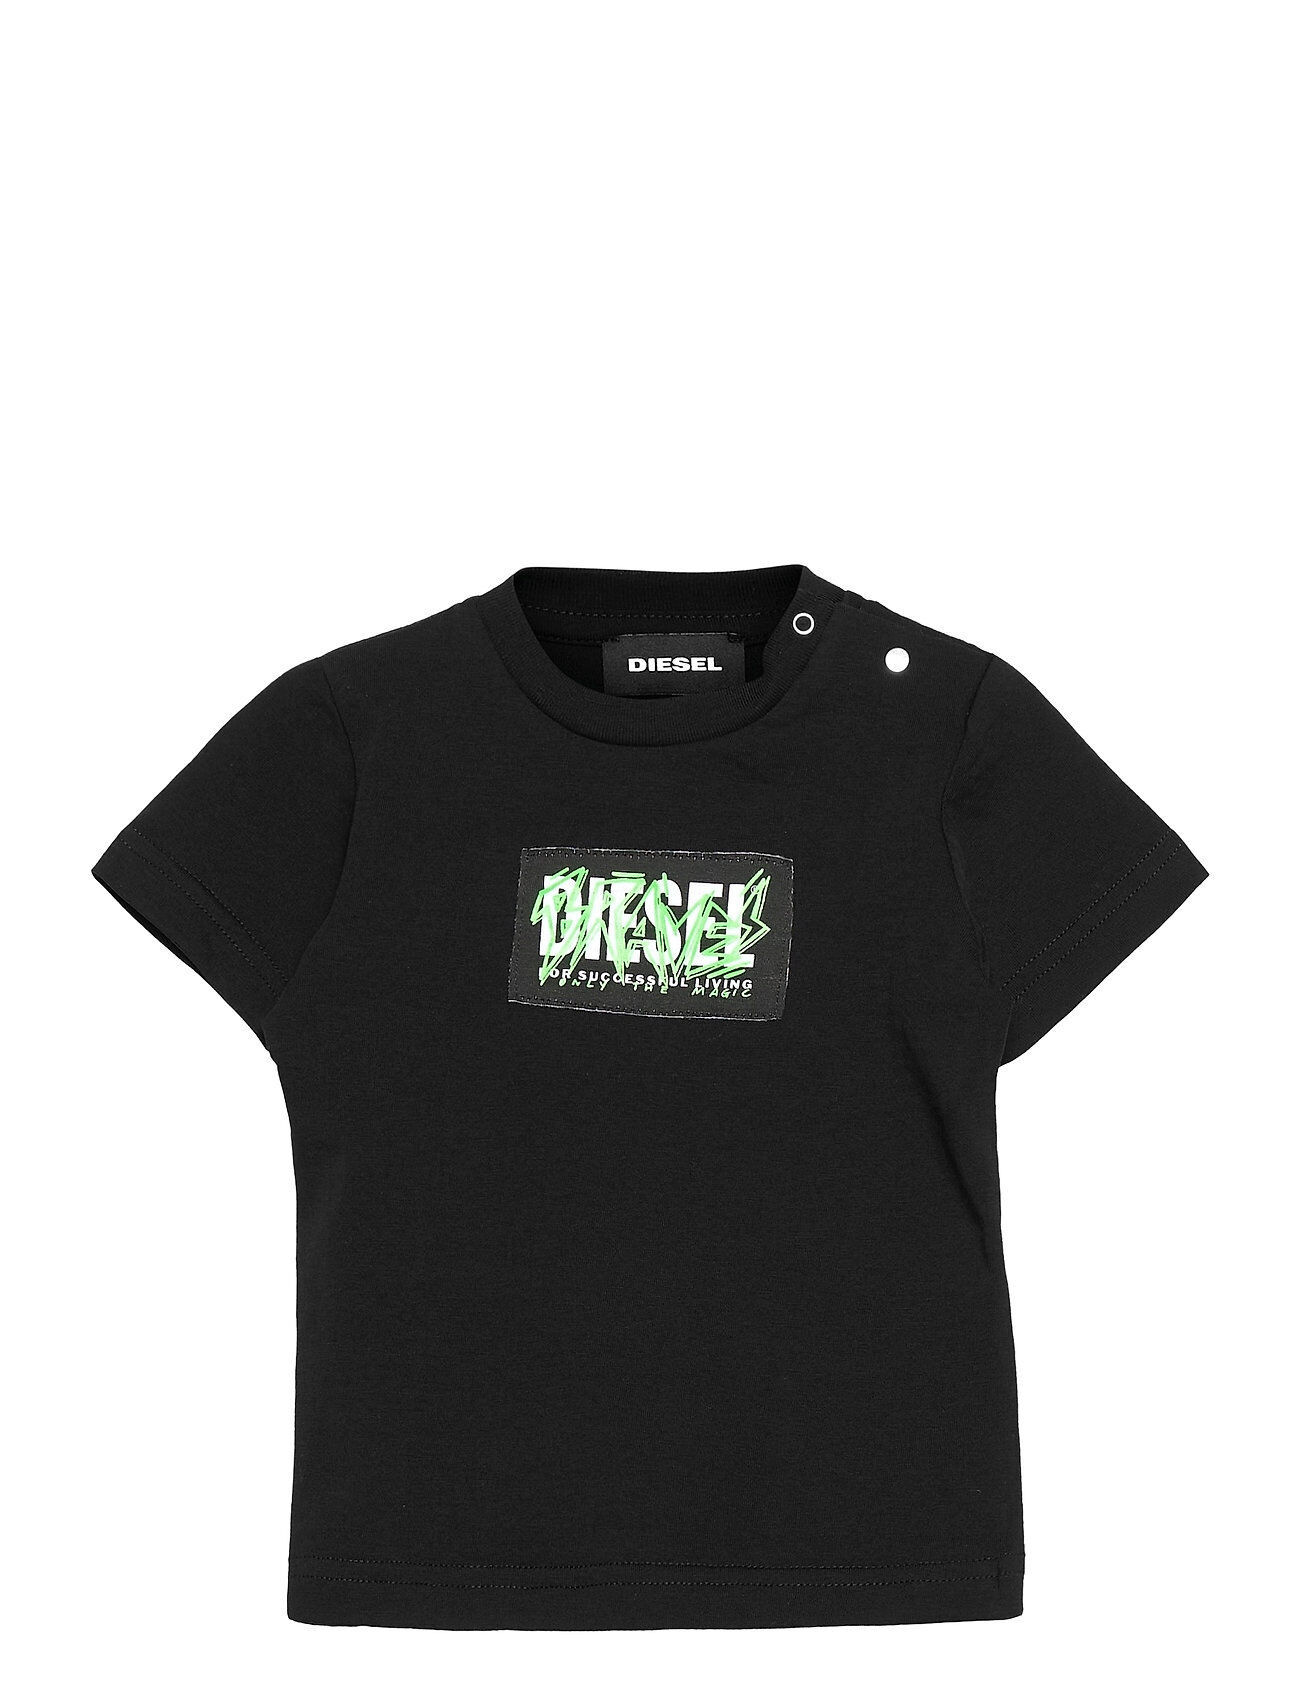 Diesel Tjustx62B T-Shirt T-shirts Short-sleeved Svart Diesel